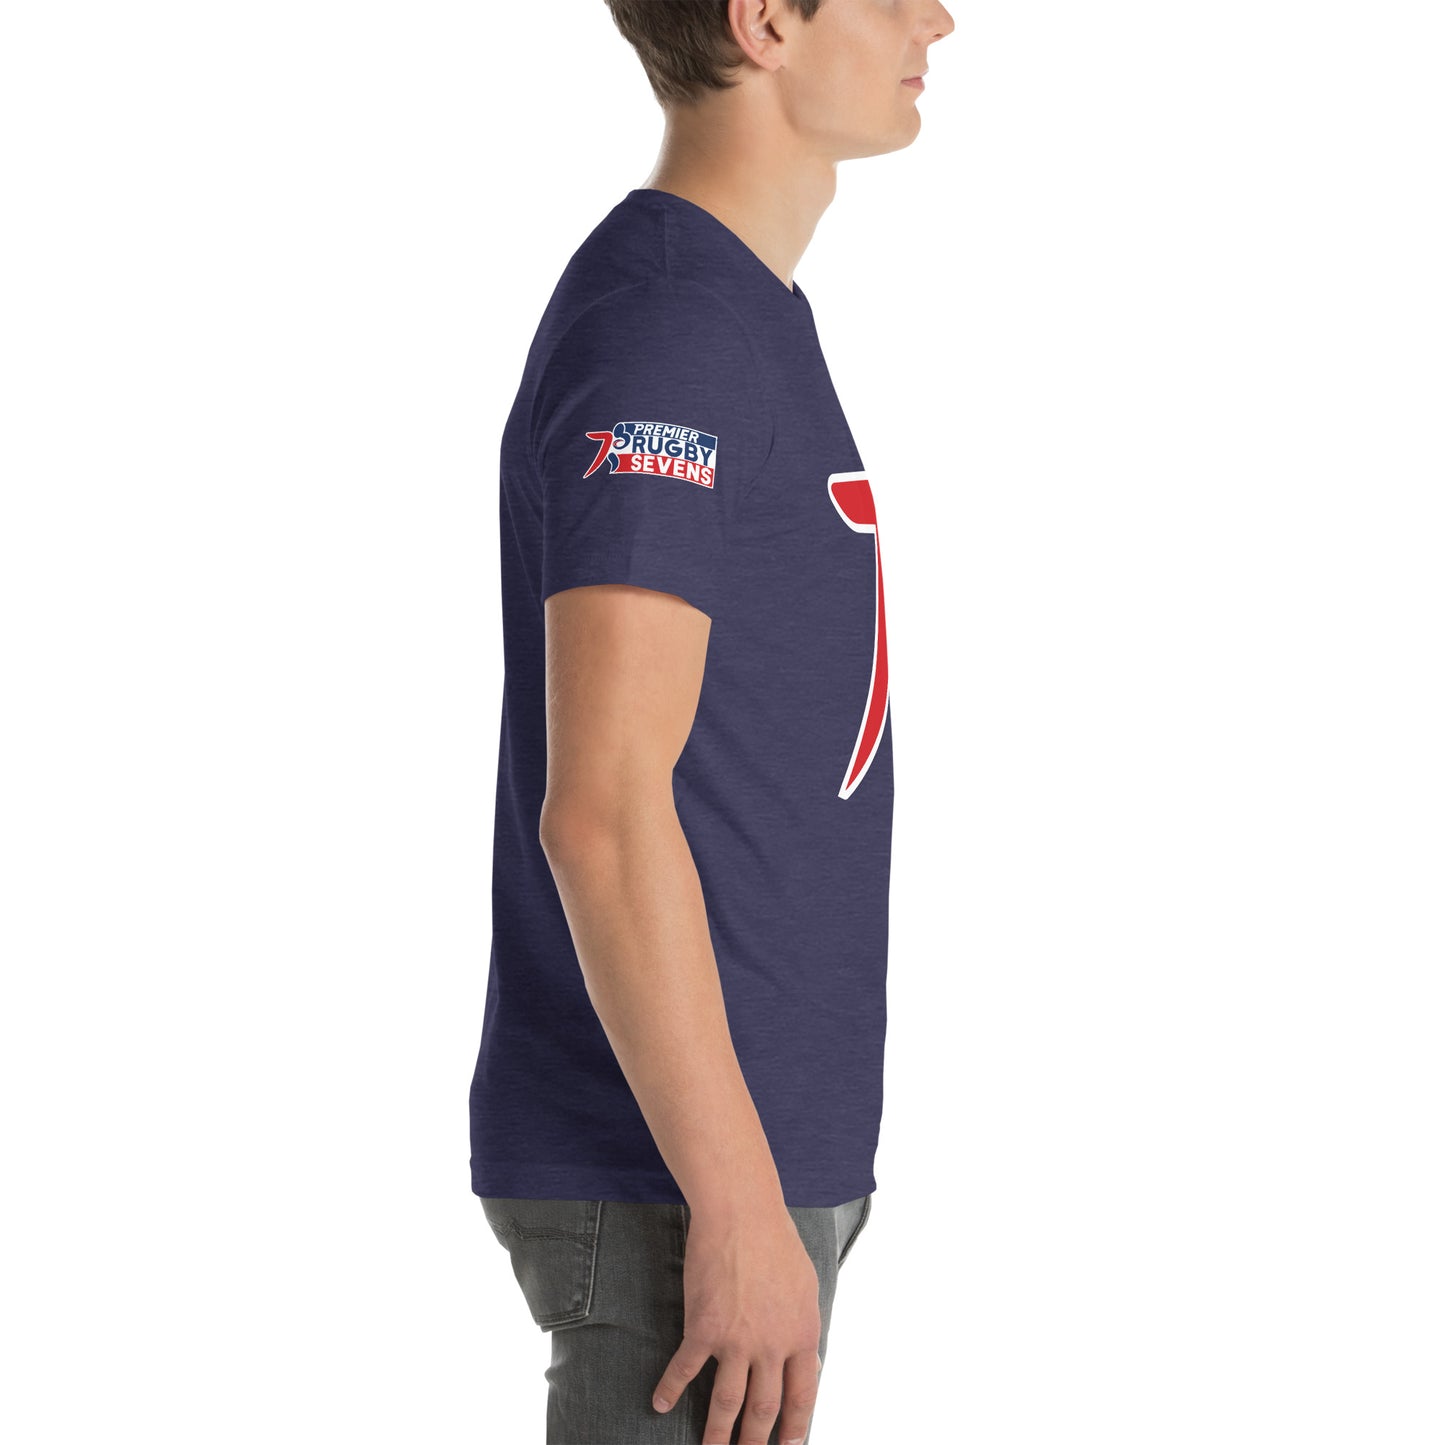 Premier Rugby Sevens Stiff Arm Player Logo Graphic Unisex T-Shirt